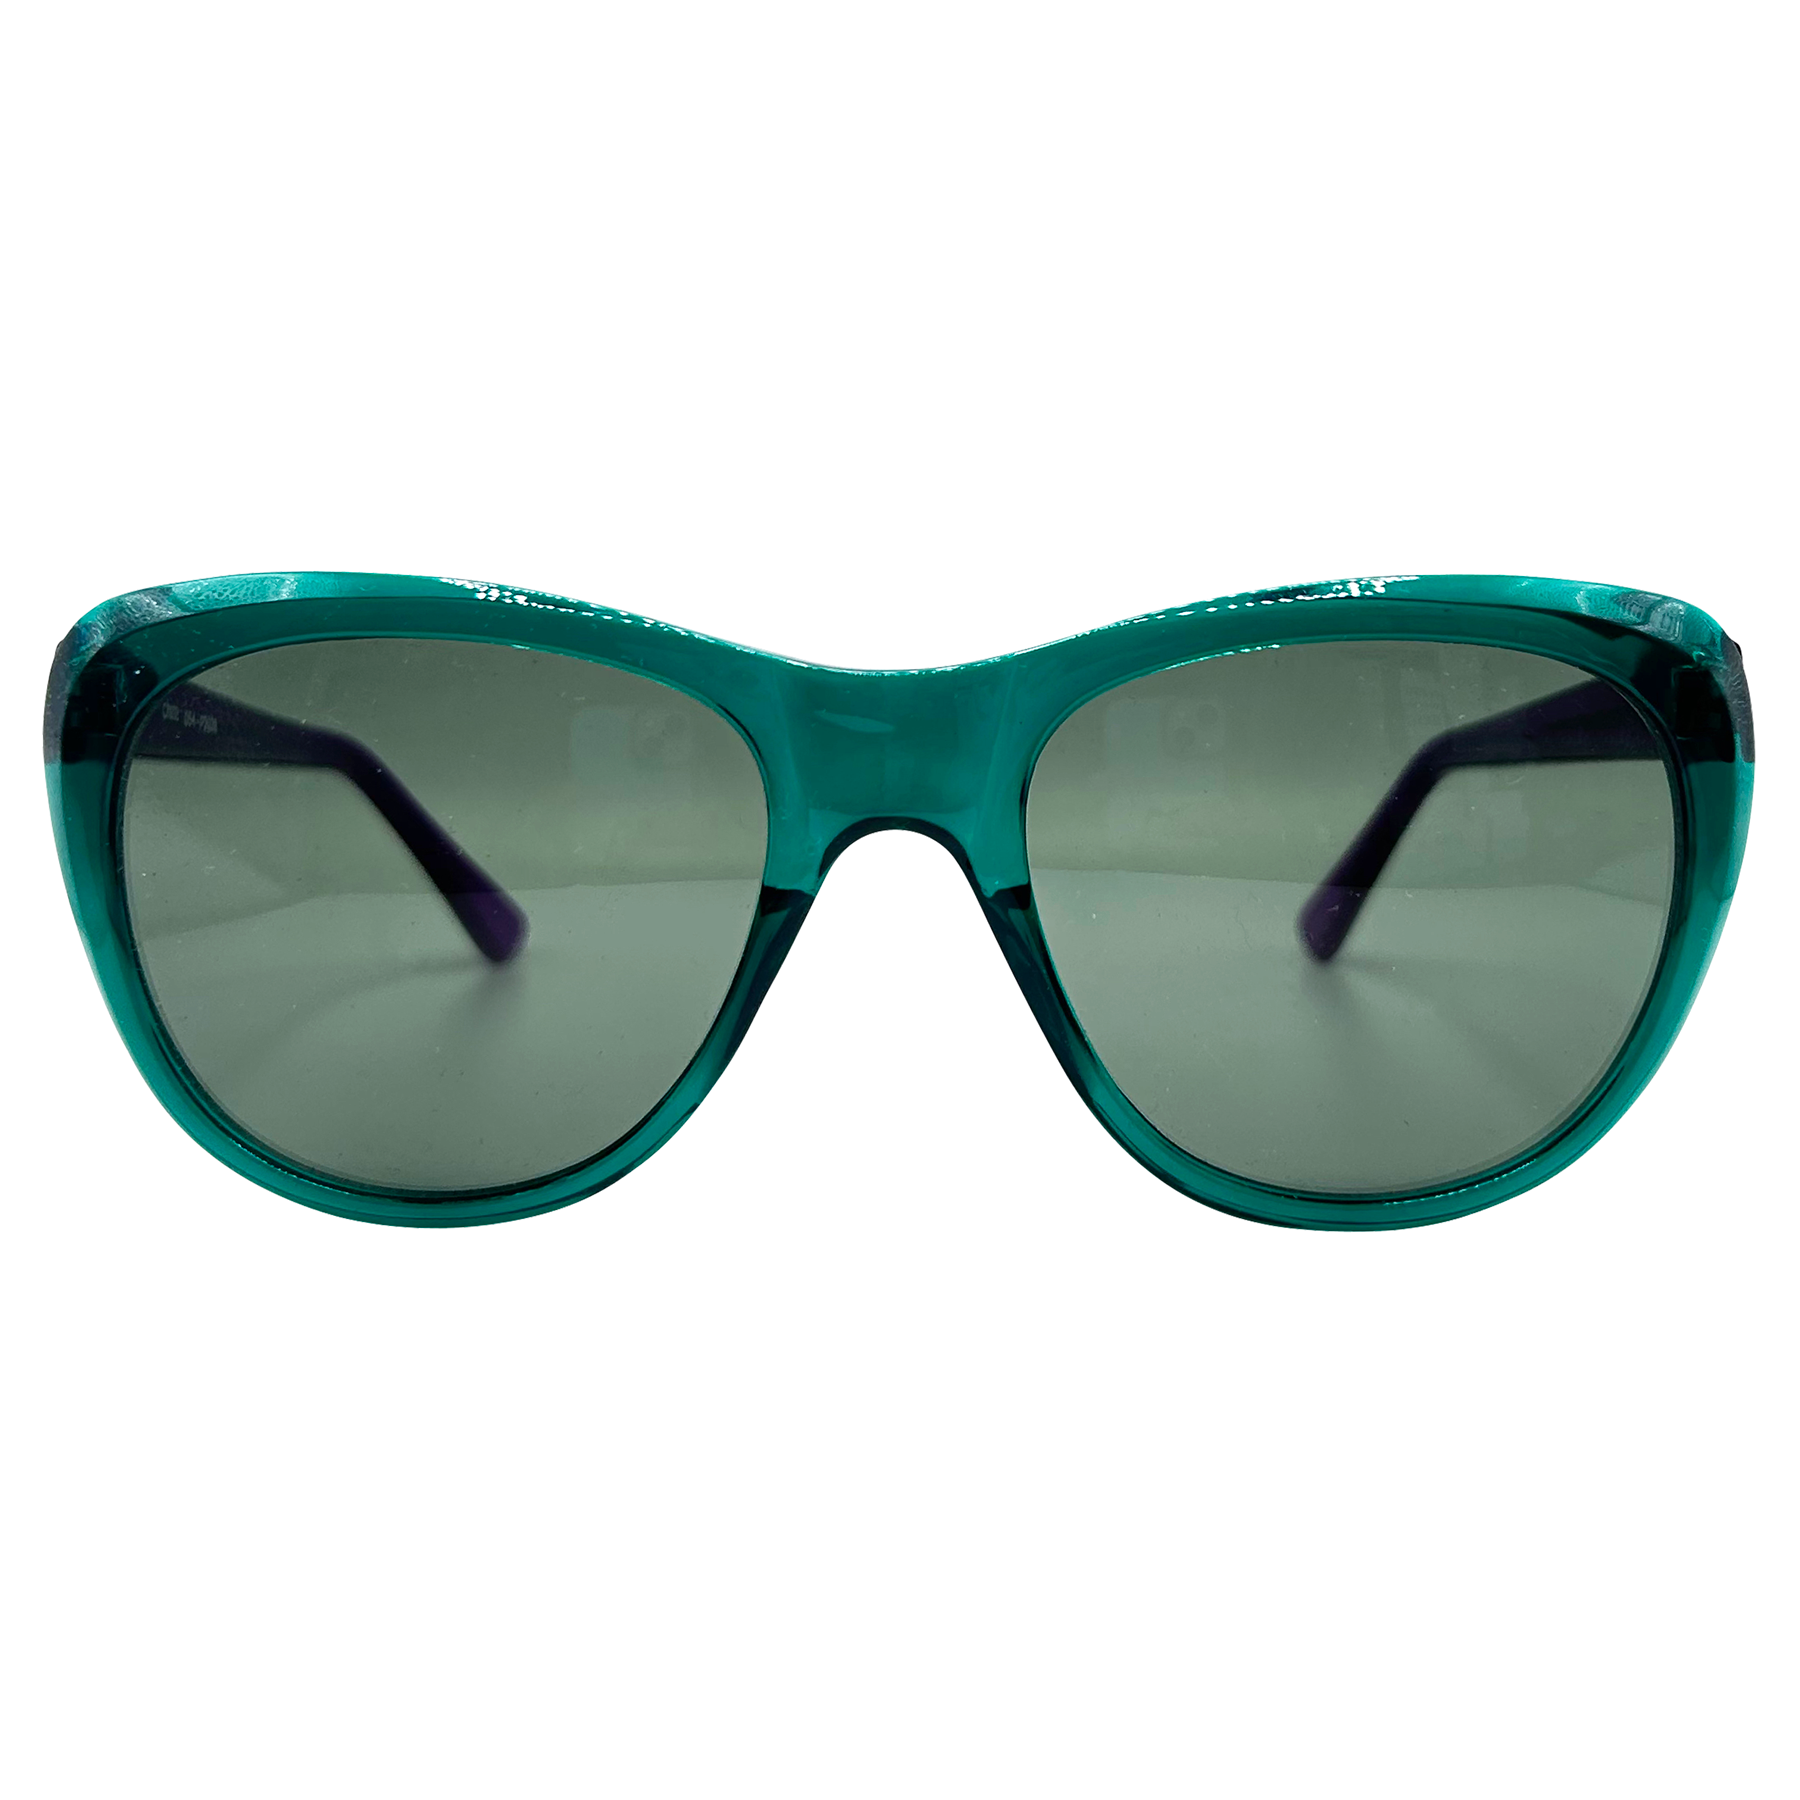 CHARMING Purple/Teal Cat-Eye Sunglasses